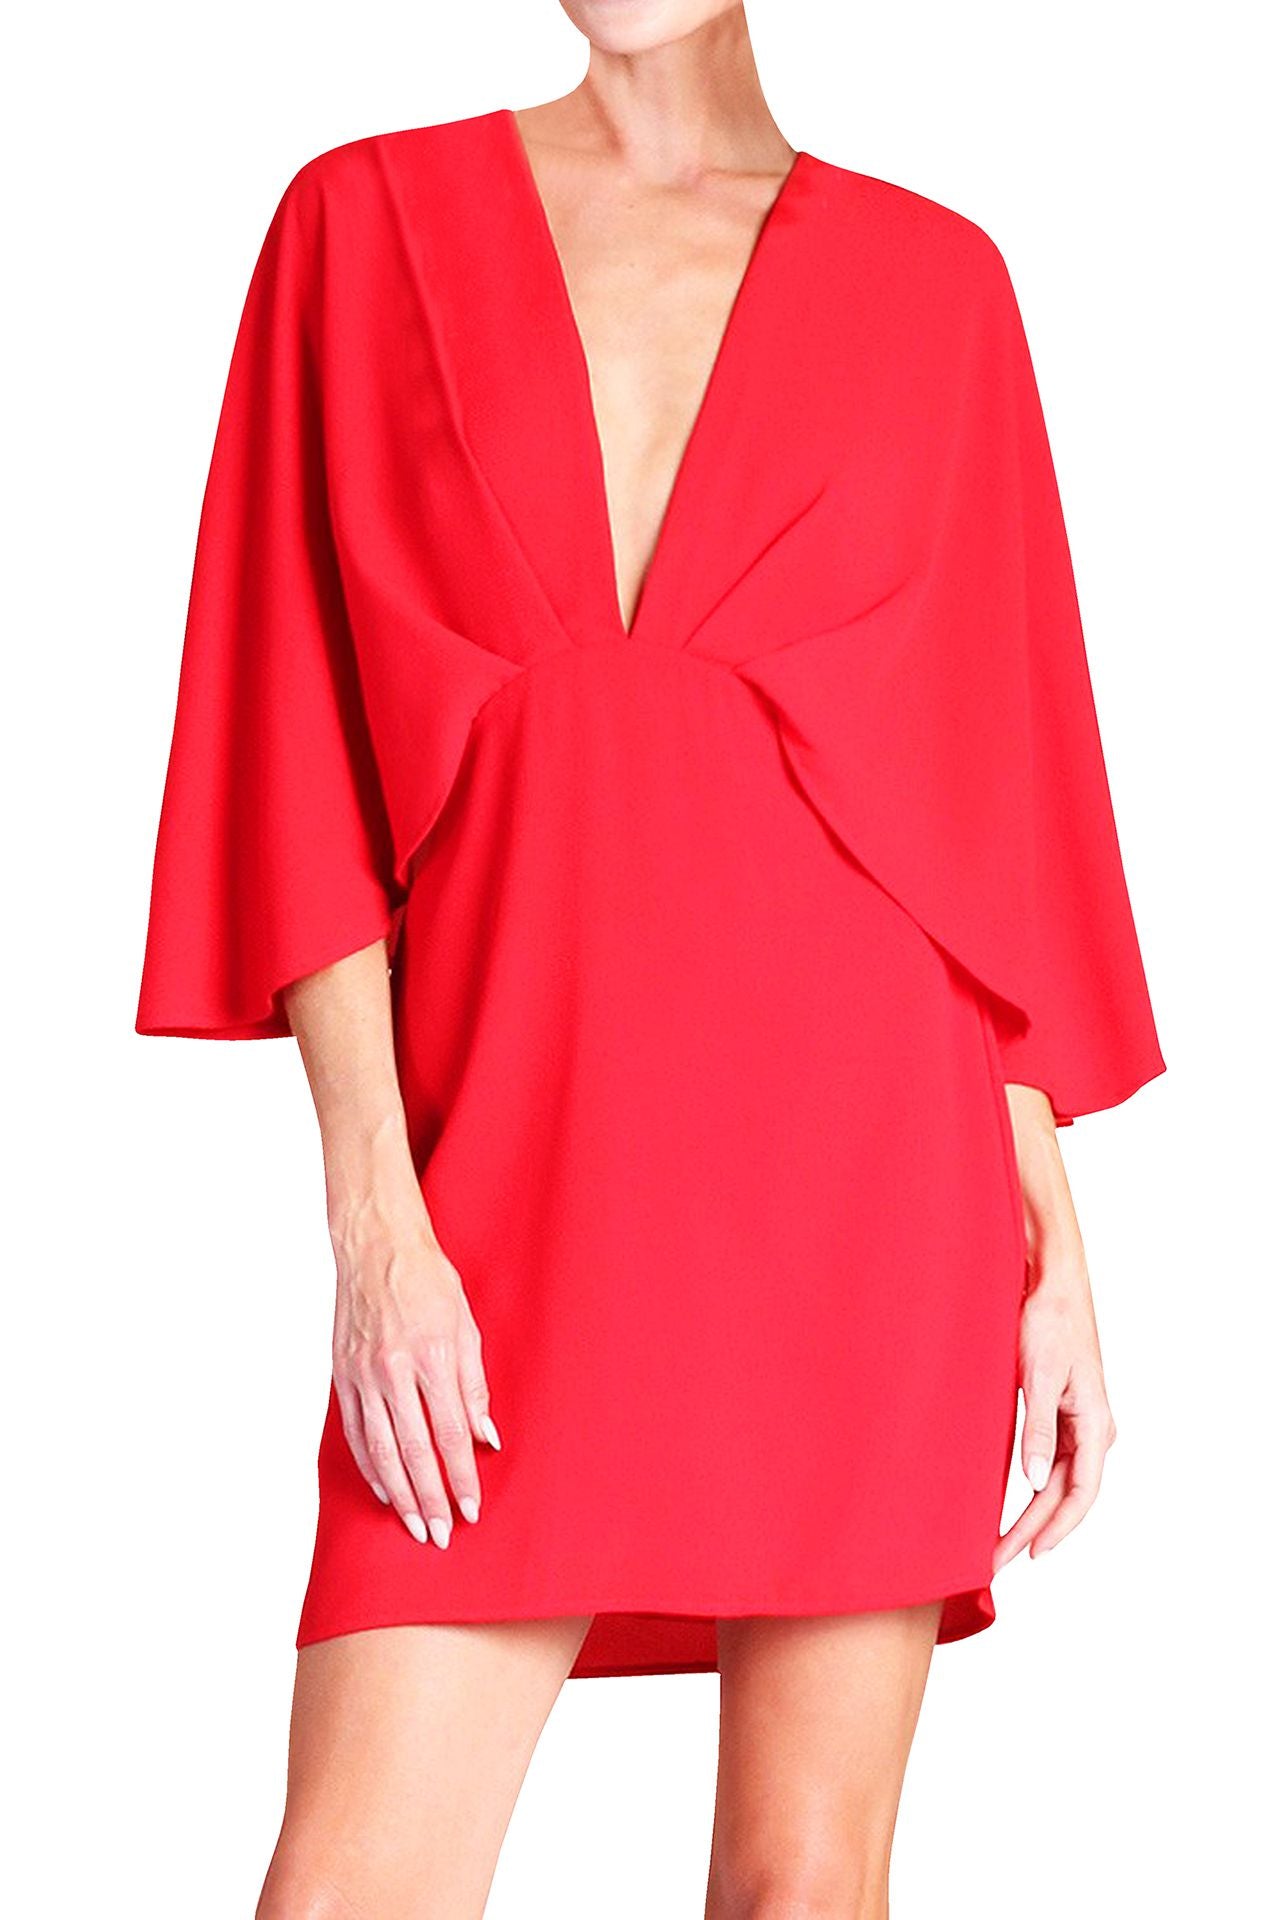 Red Half Sleeve Short Dress